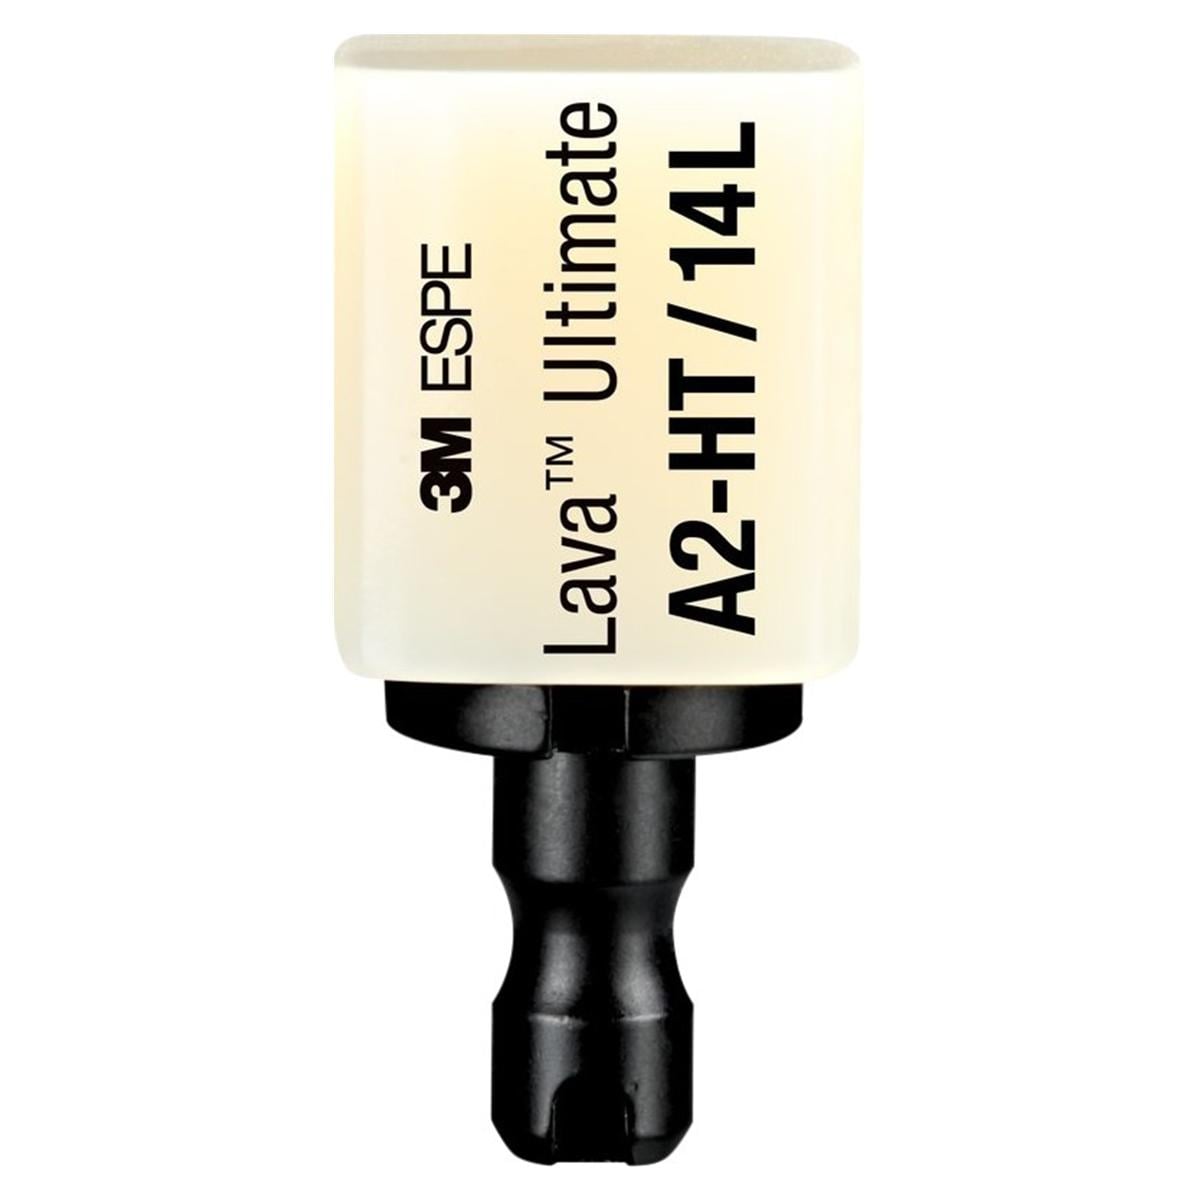 Lava Ultimate LT - I12, A3